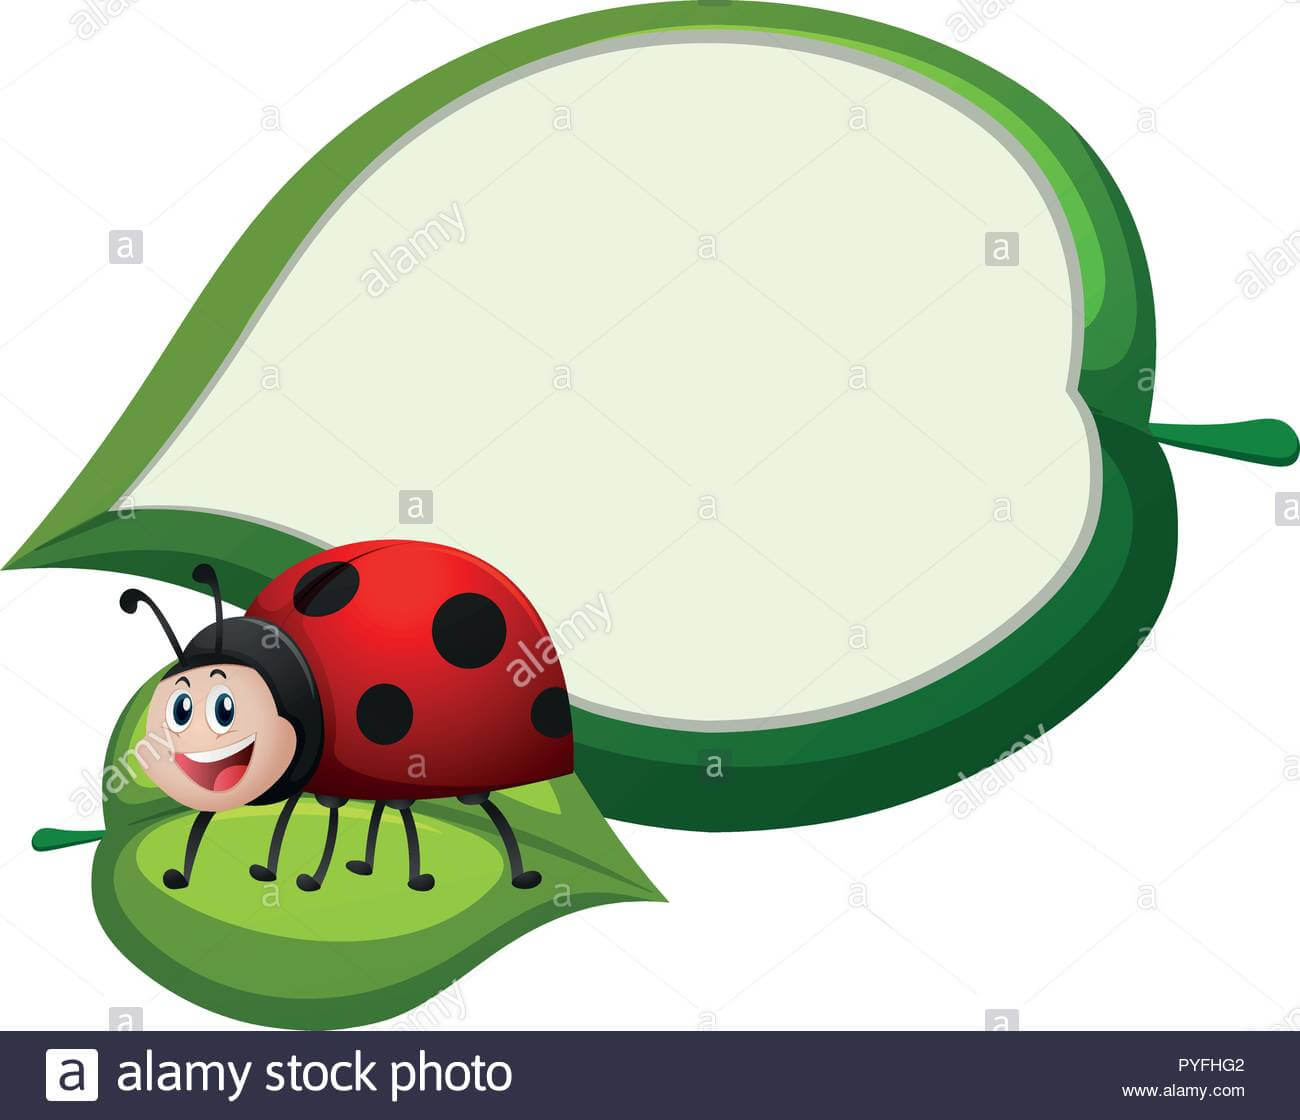 Border Template With Ladybug On Leaf Illustration Stock Pertaining To Blank Ladybug Template